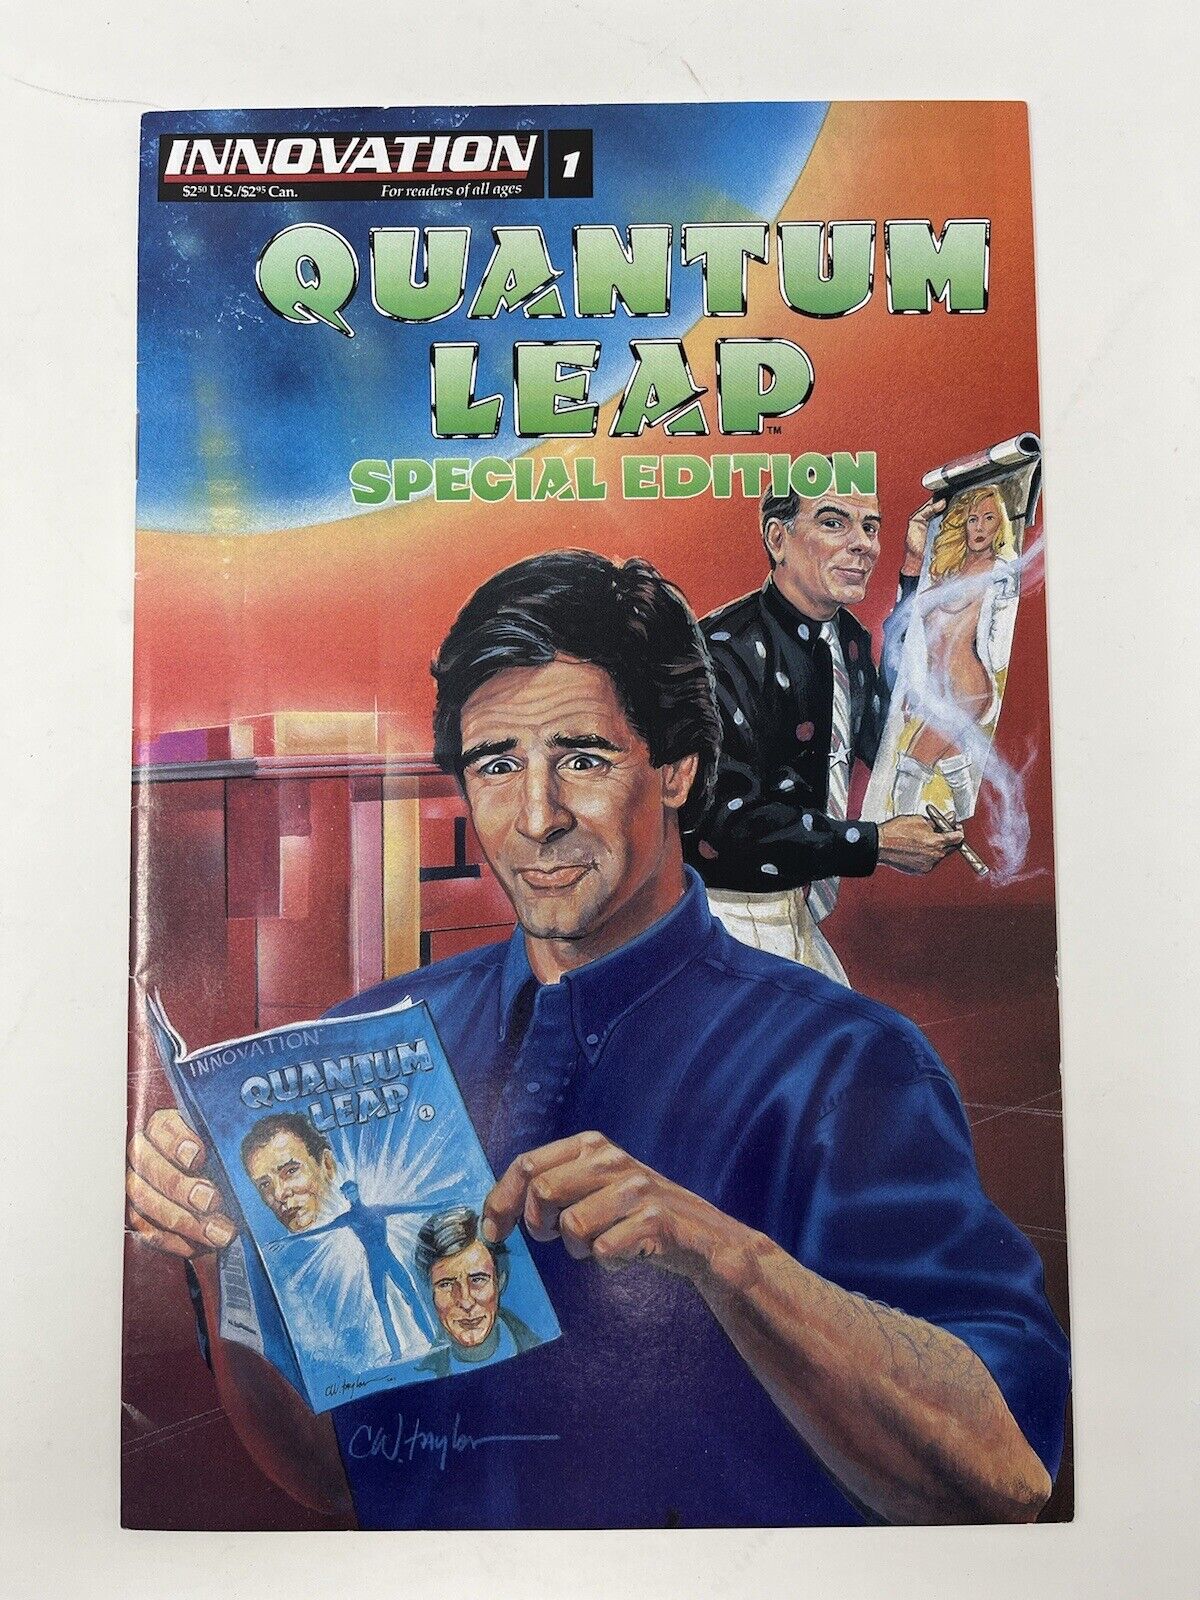 Quantum Leap Special Edition #1 / Innovation comics, Good Condition